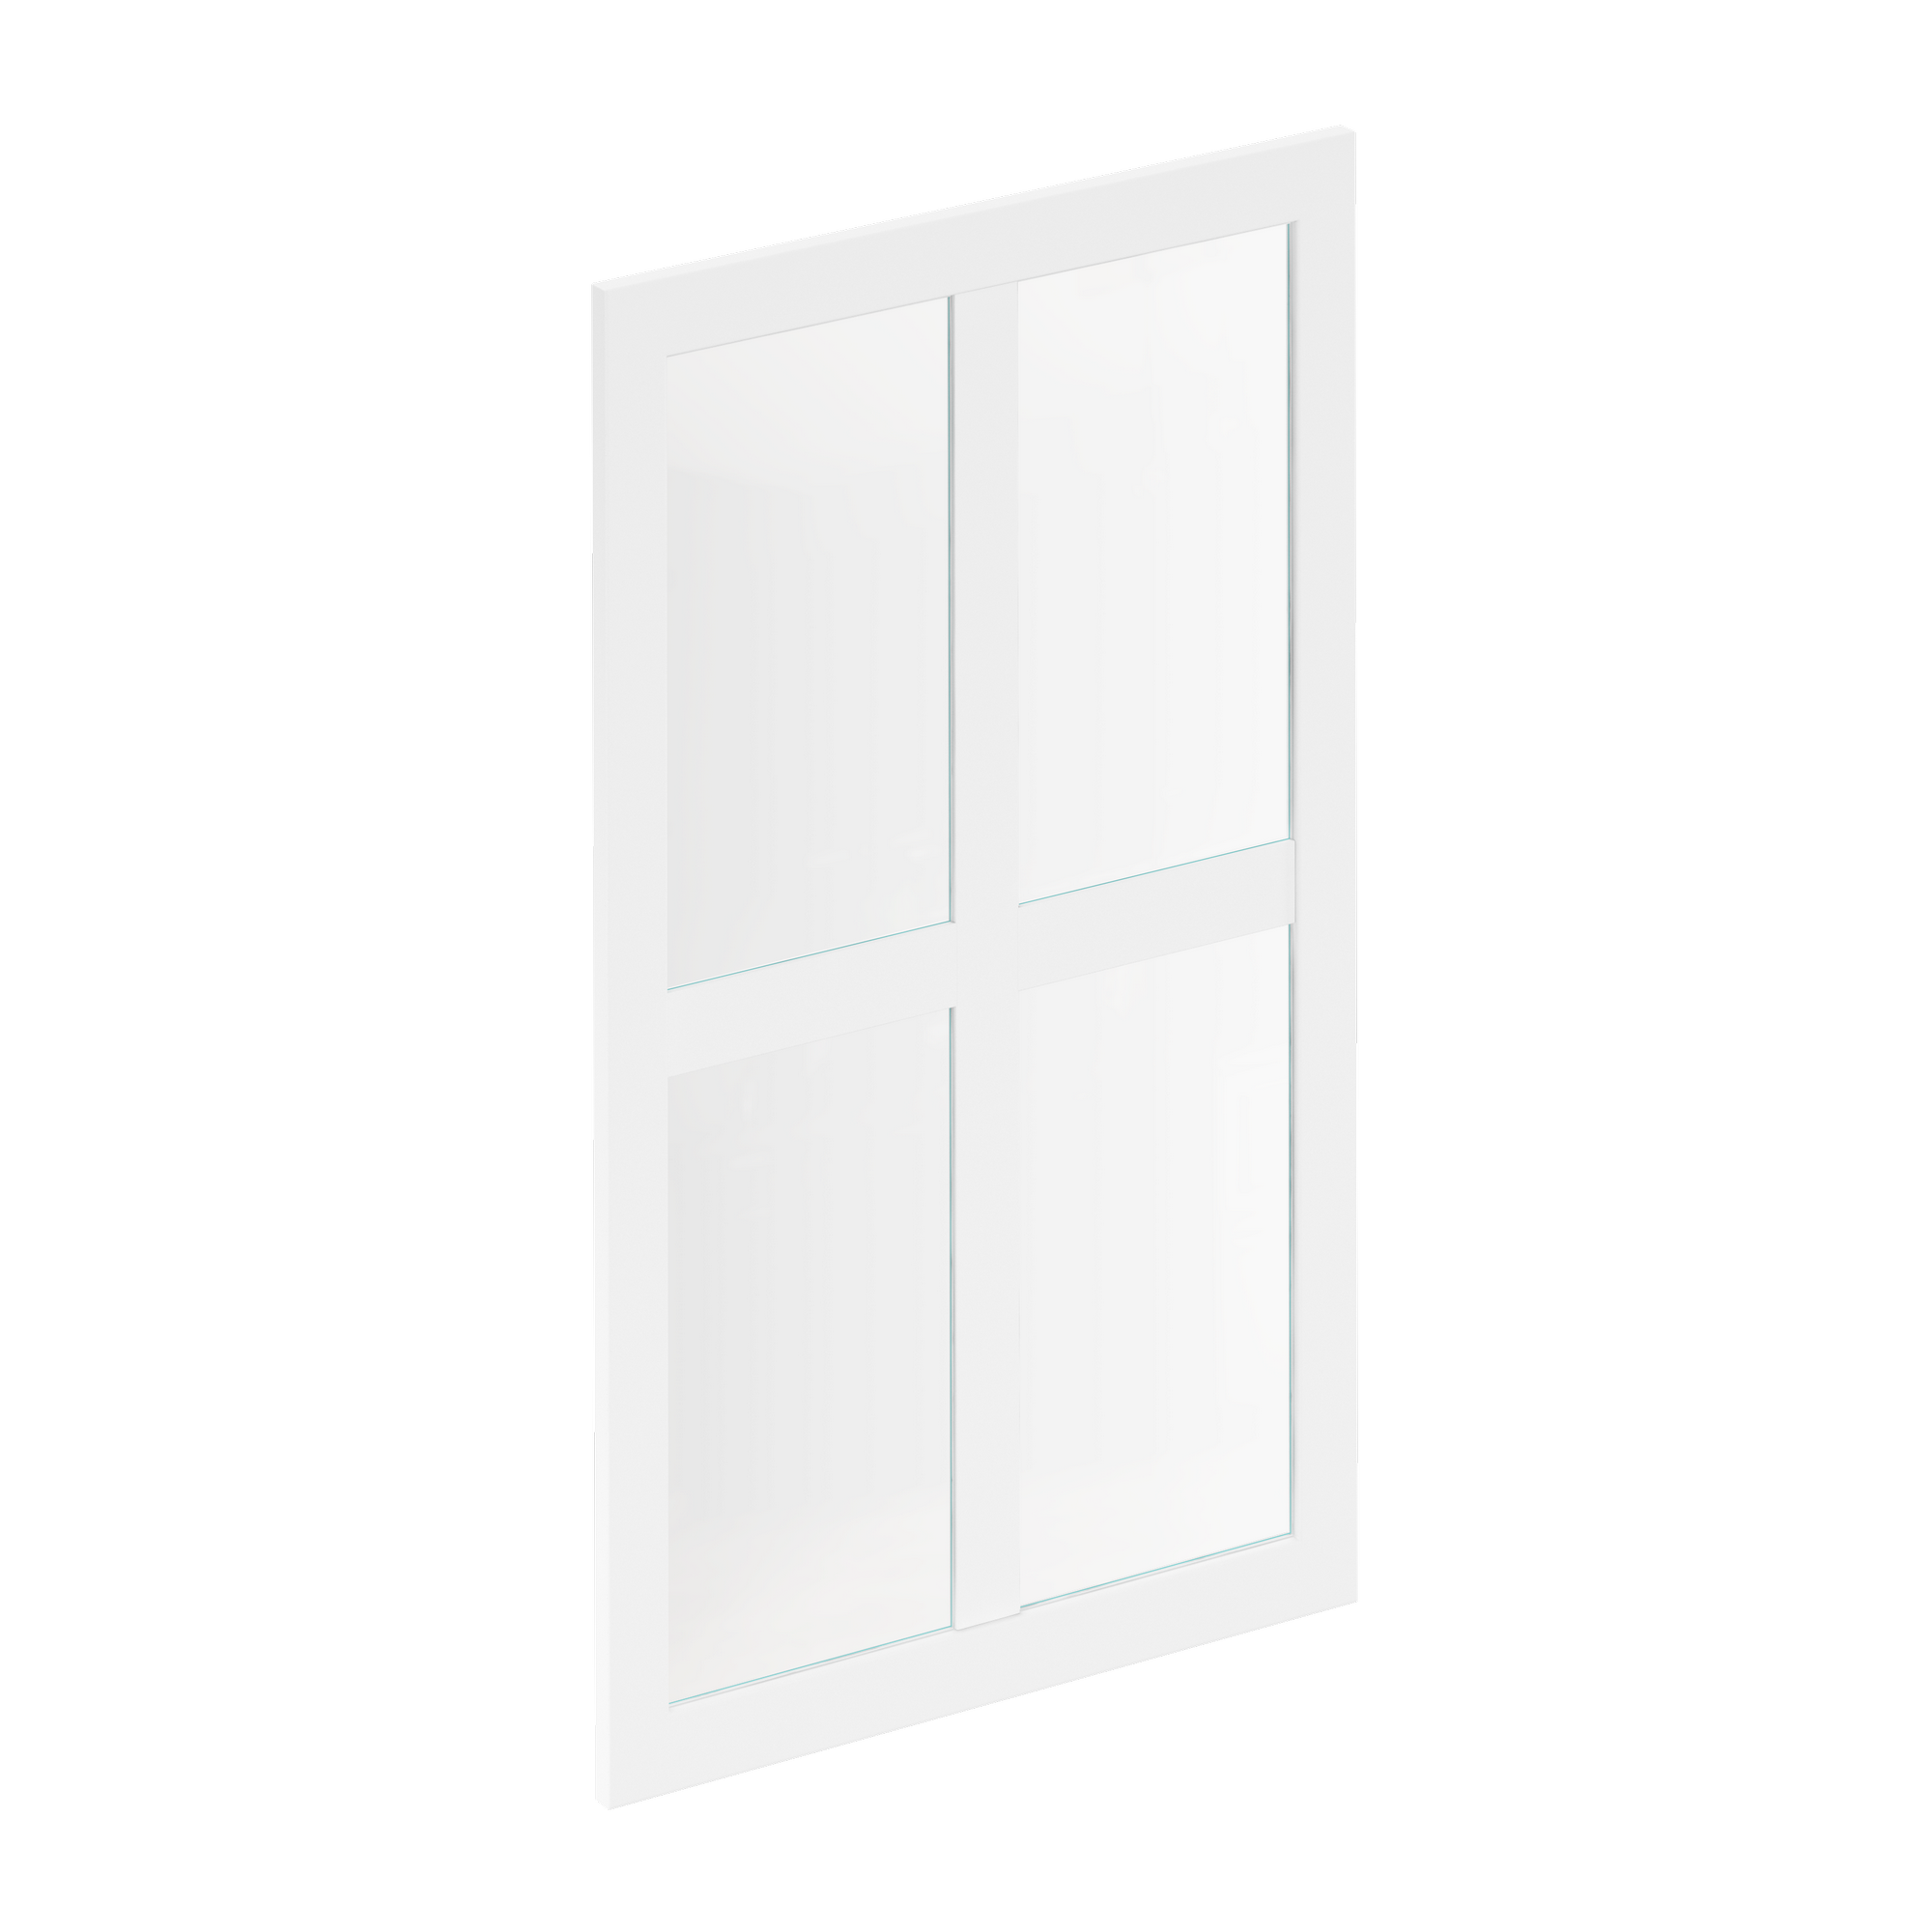 Puerta vitrina para mueble de cocina toscane blanco mate h 102.4 x l 60 cm